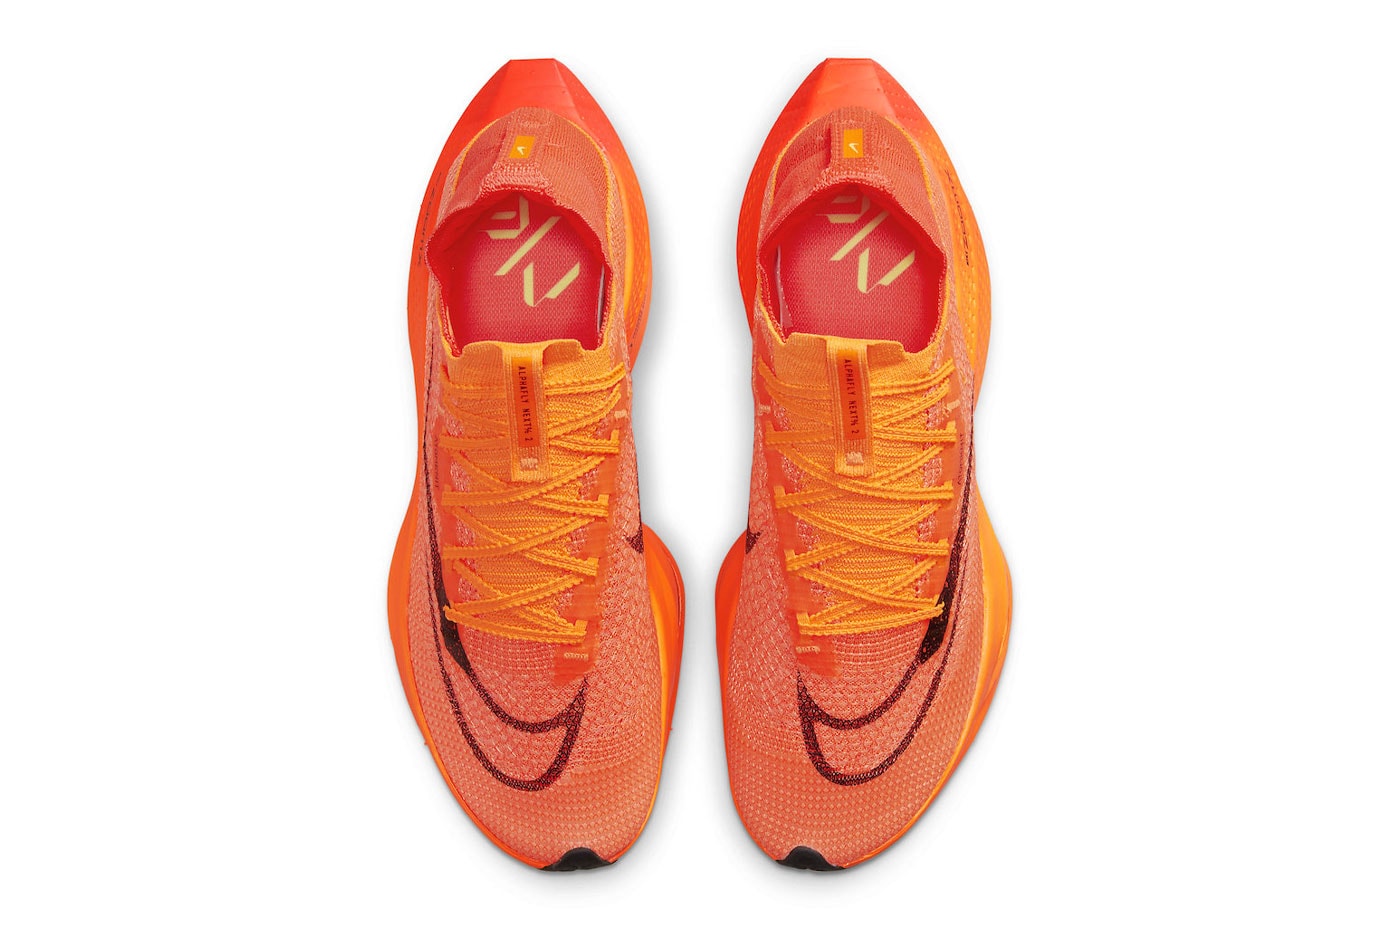 Nike Air Zoom Alphafly NEXT percent 2 bright total orange record marathon atomknit zoomx carbon fiber plate release info date price 275 usd